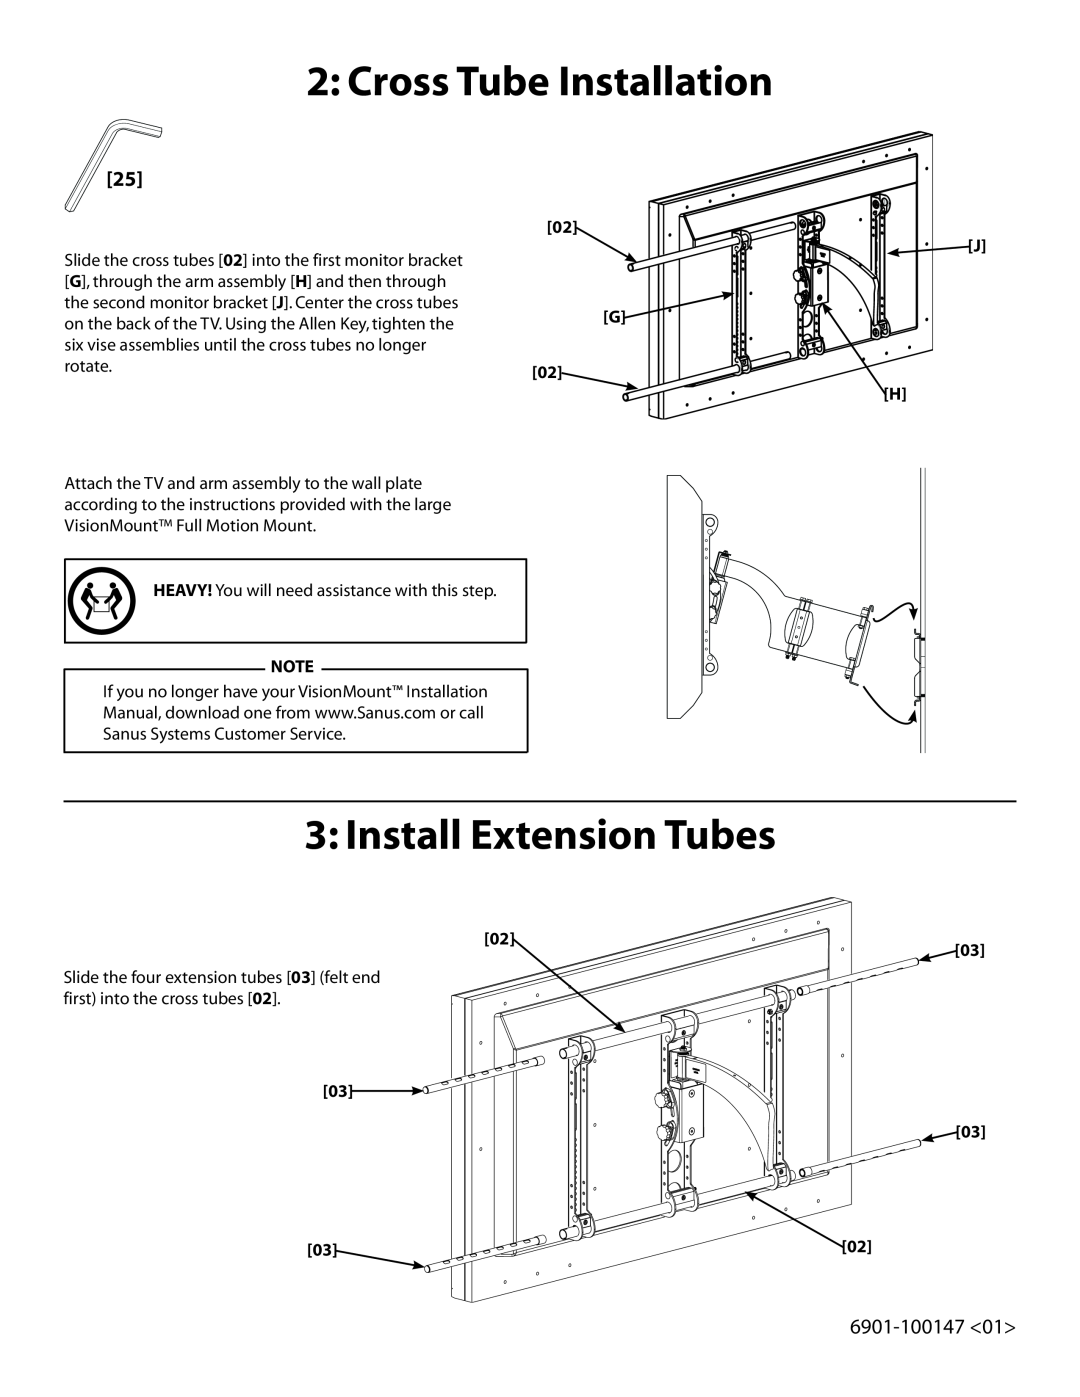 Sanus Systems LAS1A manual Cross Tube Installation, Install Extension Tubes, 6901-100147 